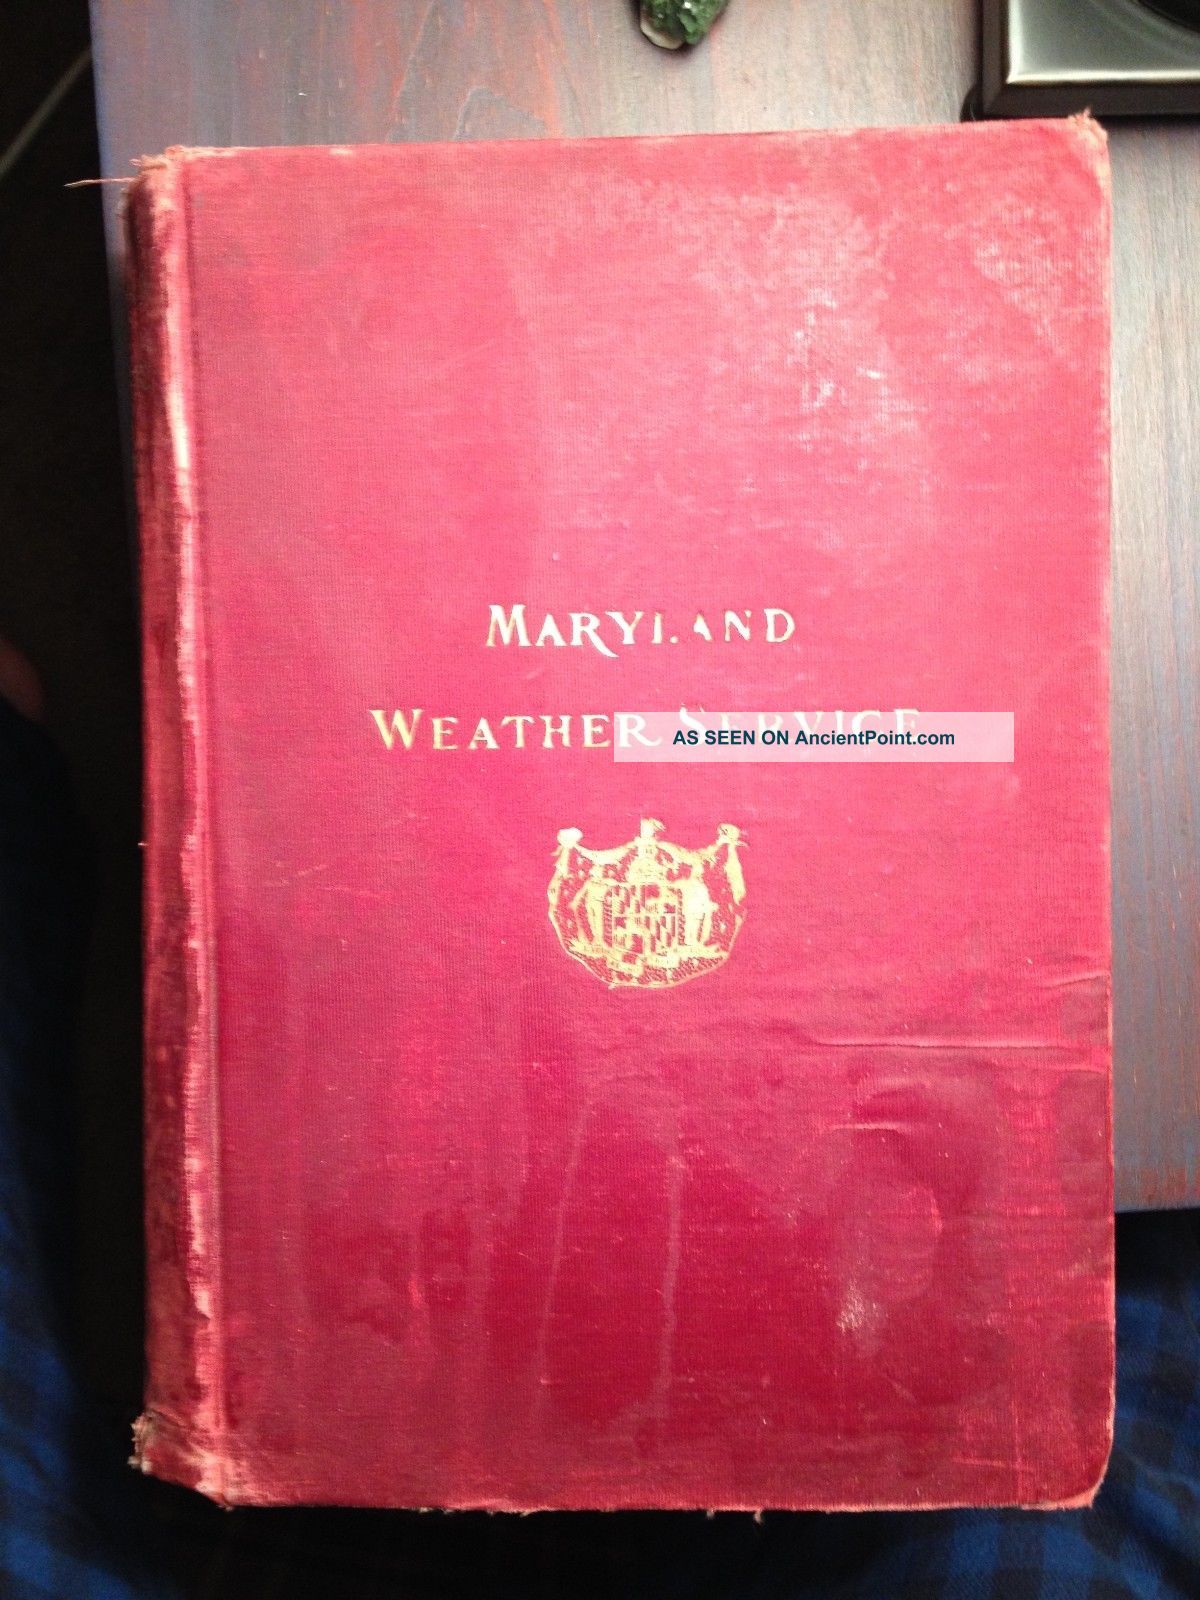 The Maryland Weather Service Volume Iii - 1910 Other photo